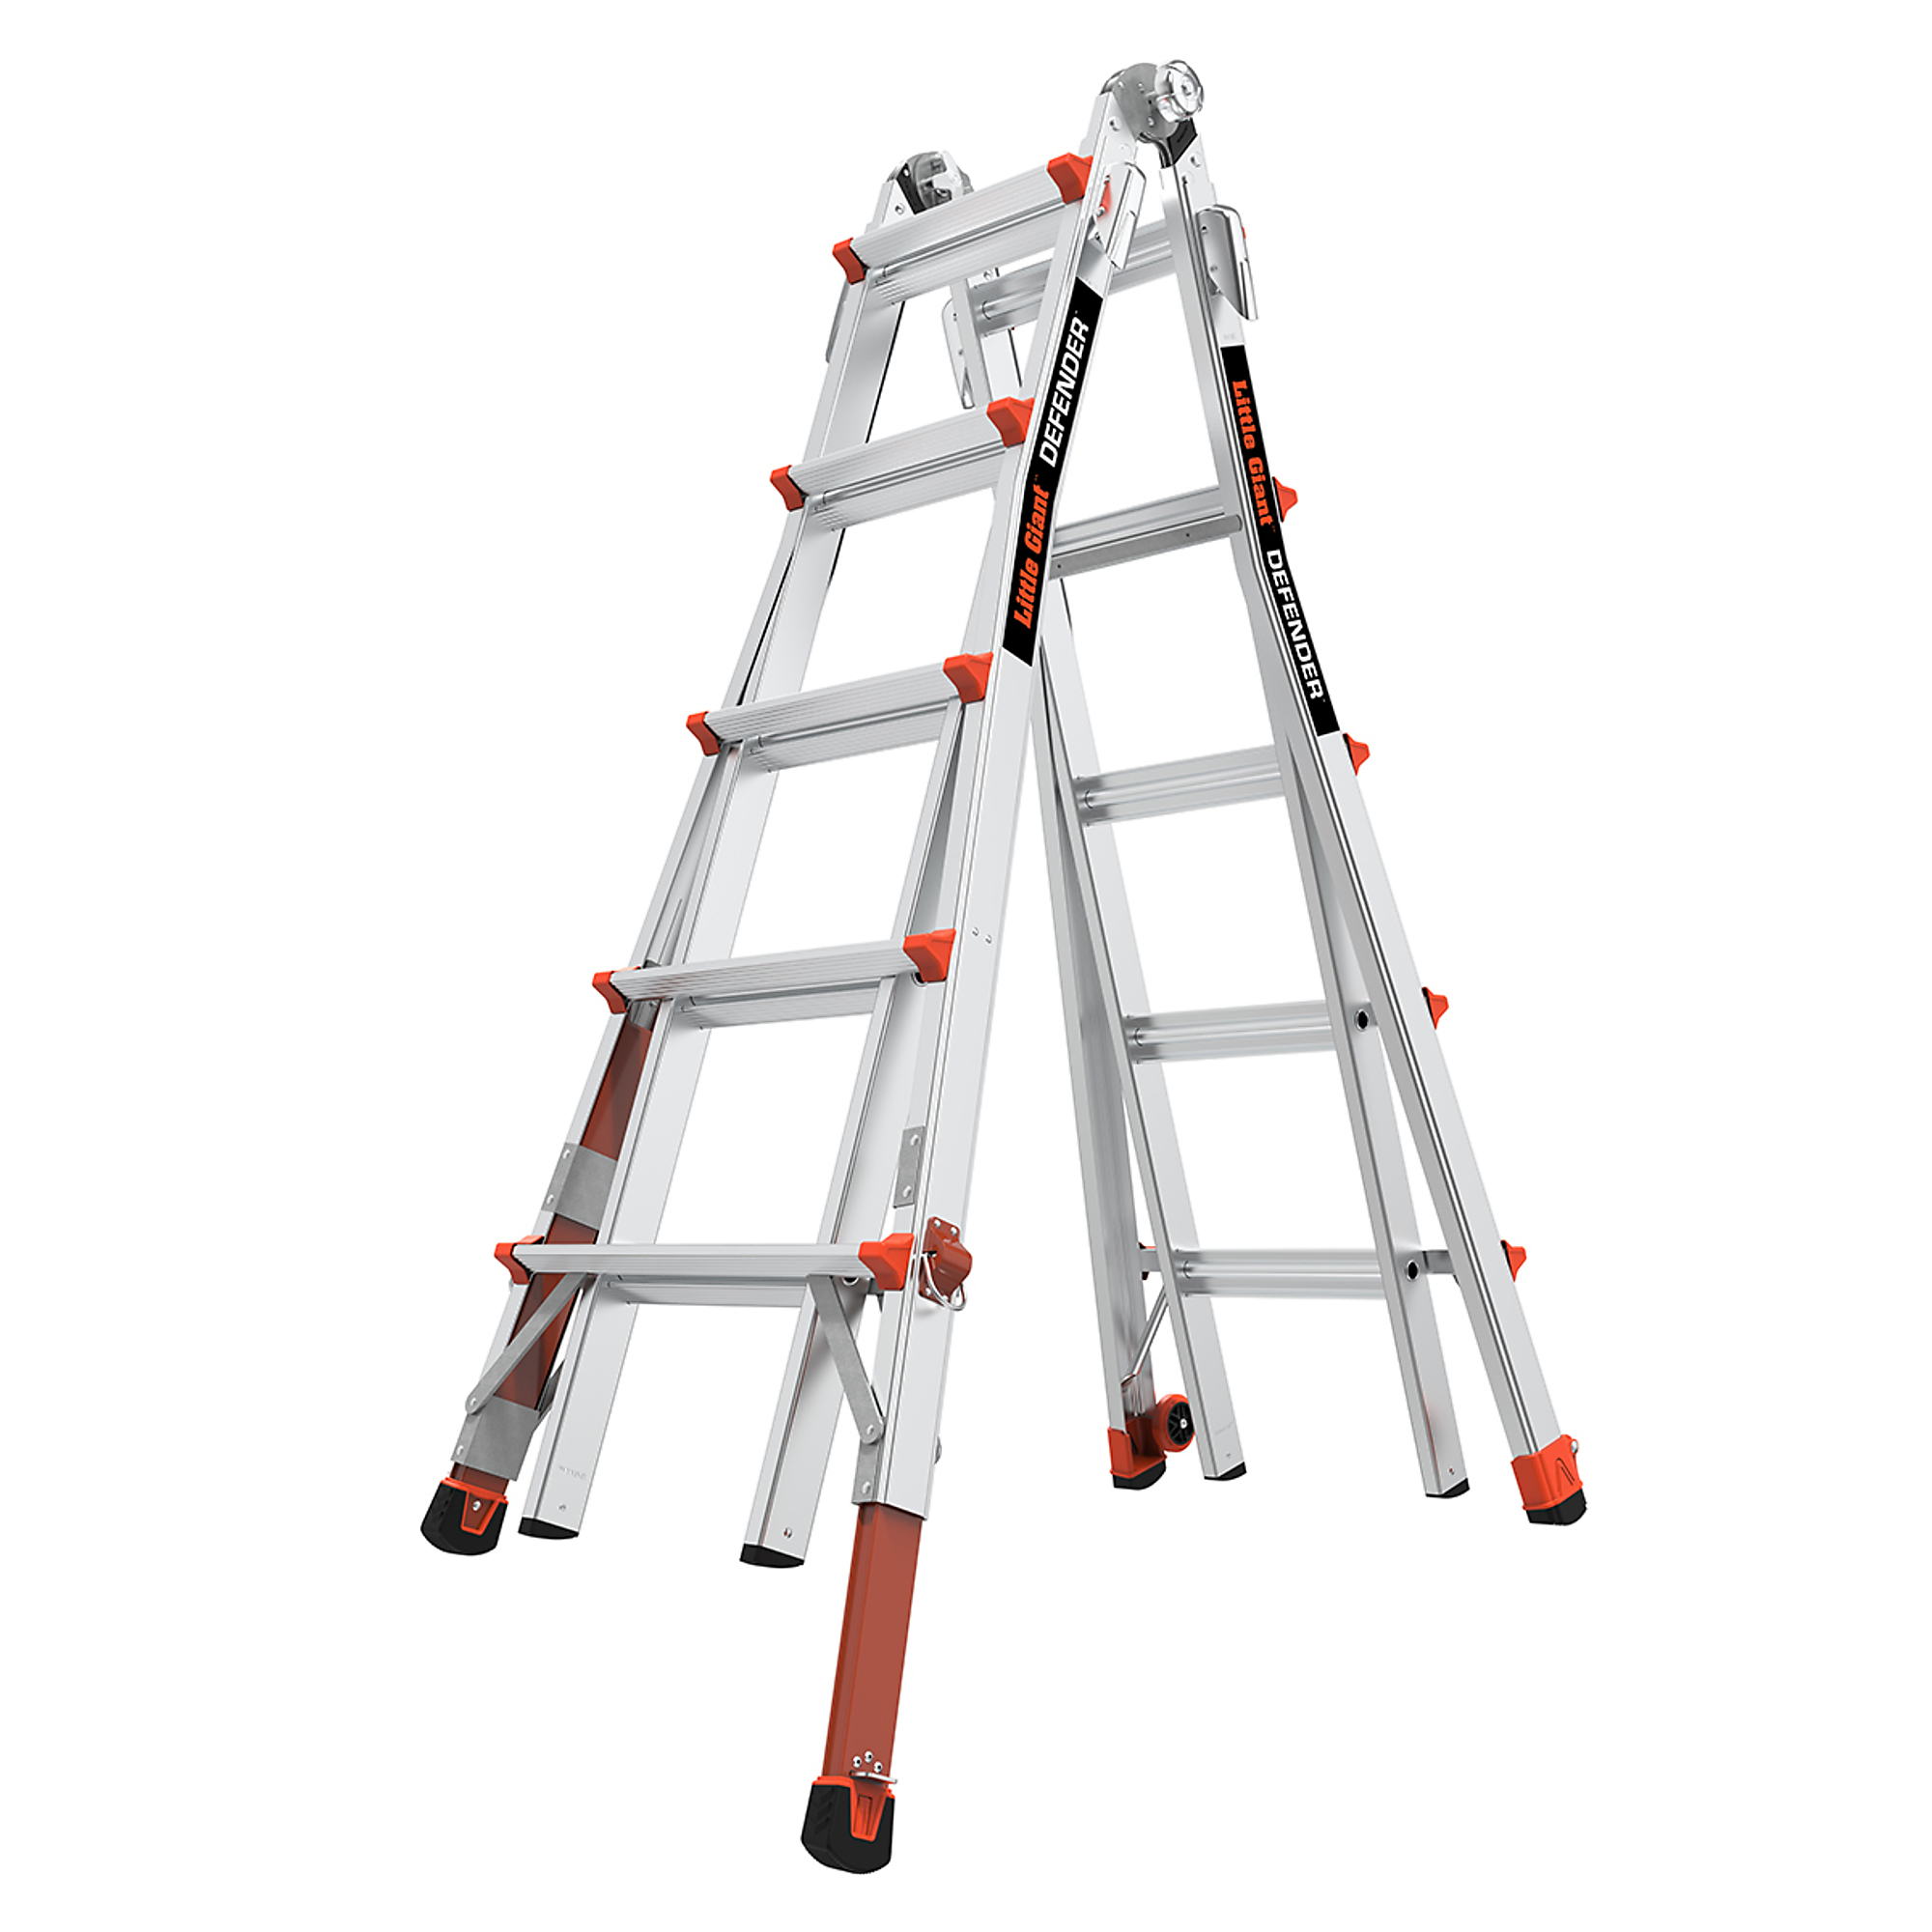 Little Giant Ladder, DEFENDER 22 300lb Alum Articulated Extend Ladder, Height 22 ft, Capacity 300 lb, Material Aluminum, Model 15182-882